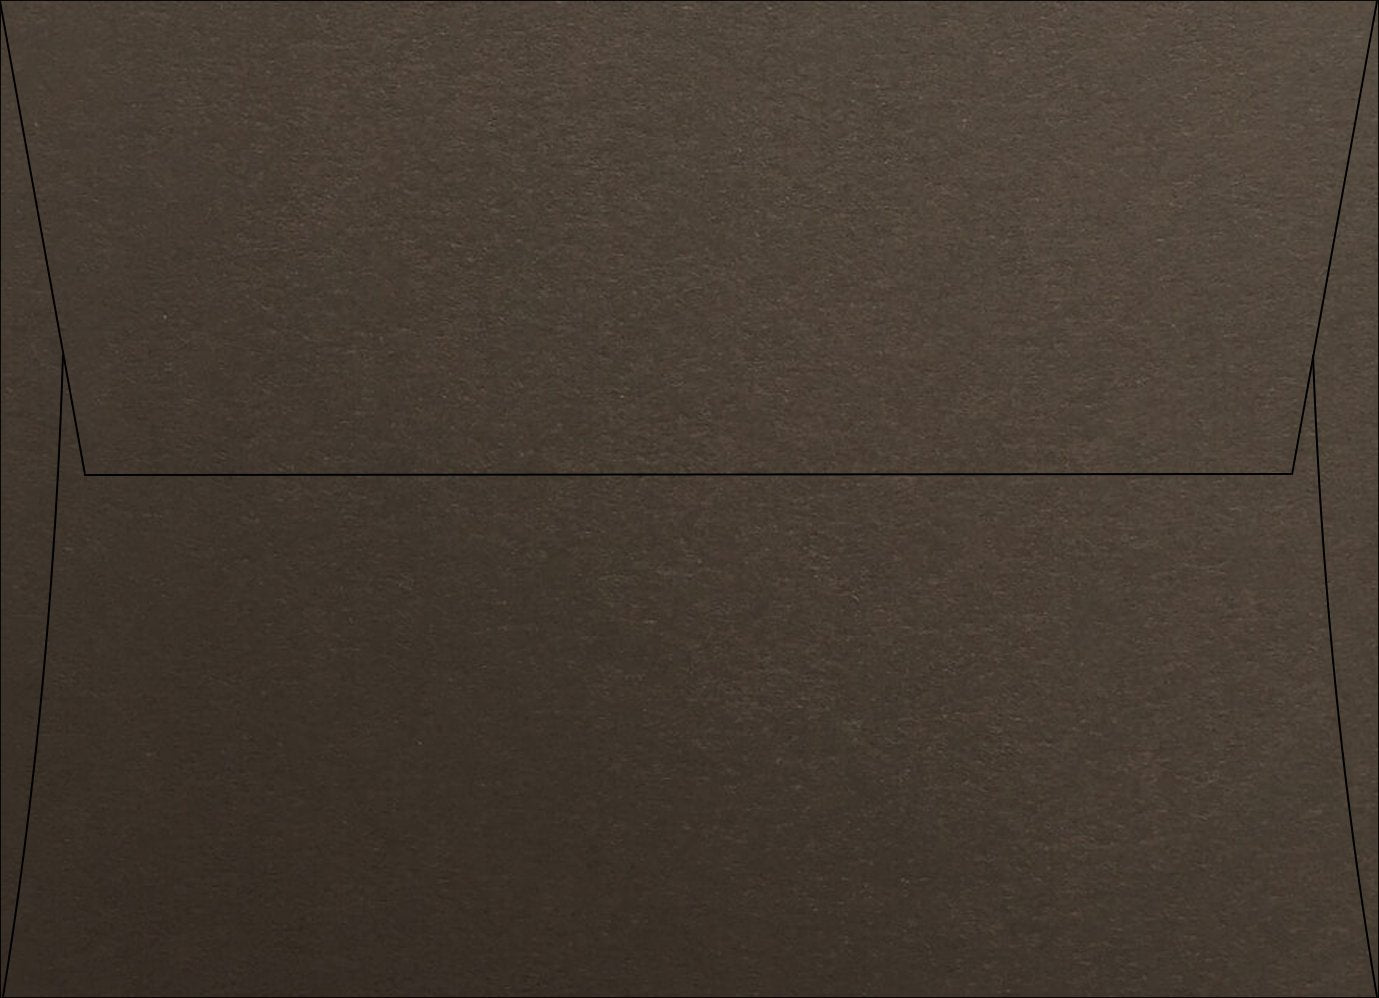 Chocolate Speckletone Square Flap Envelopes